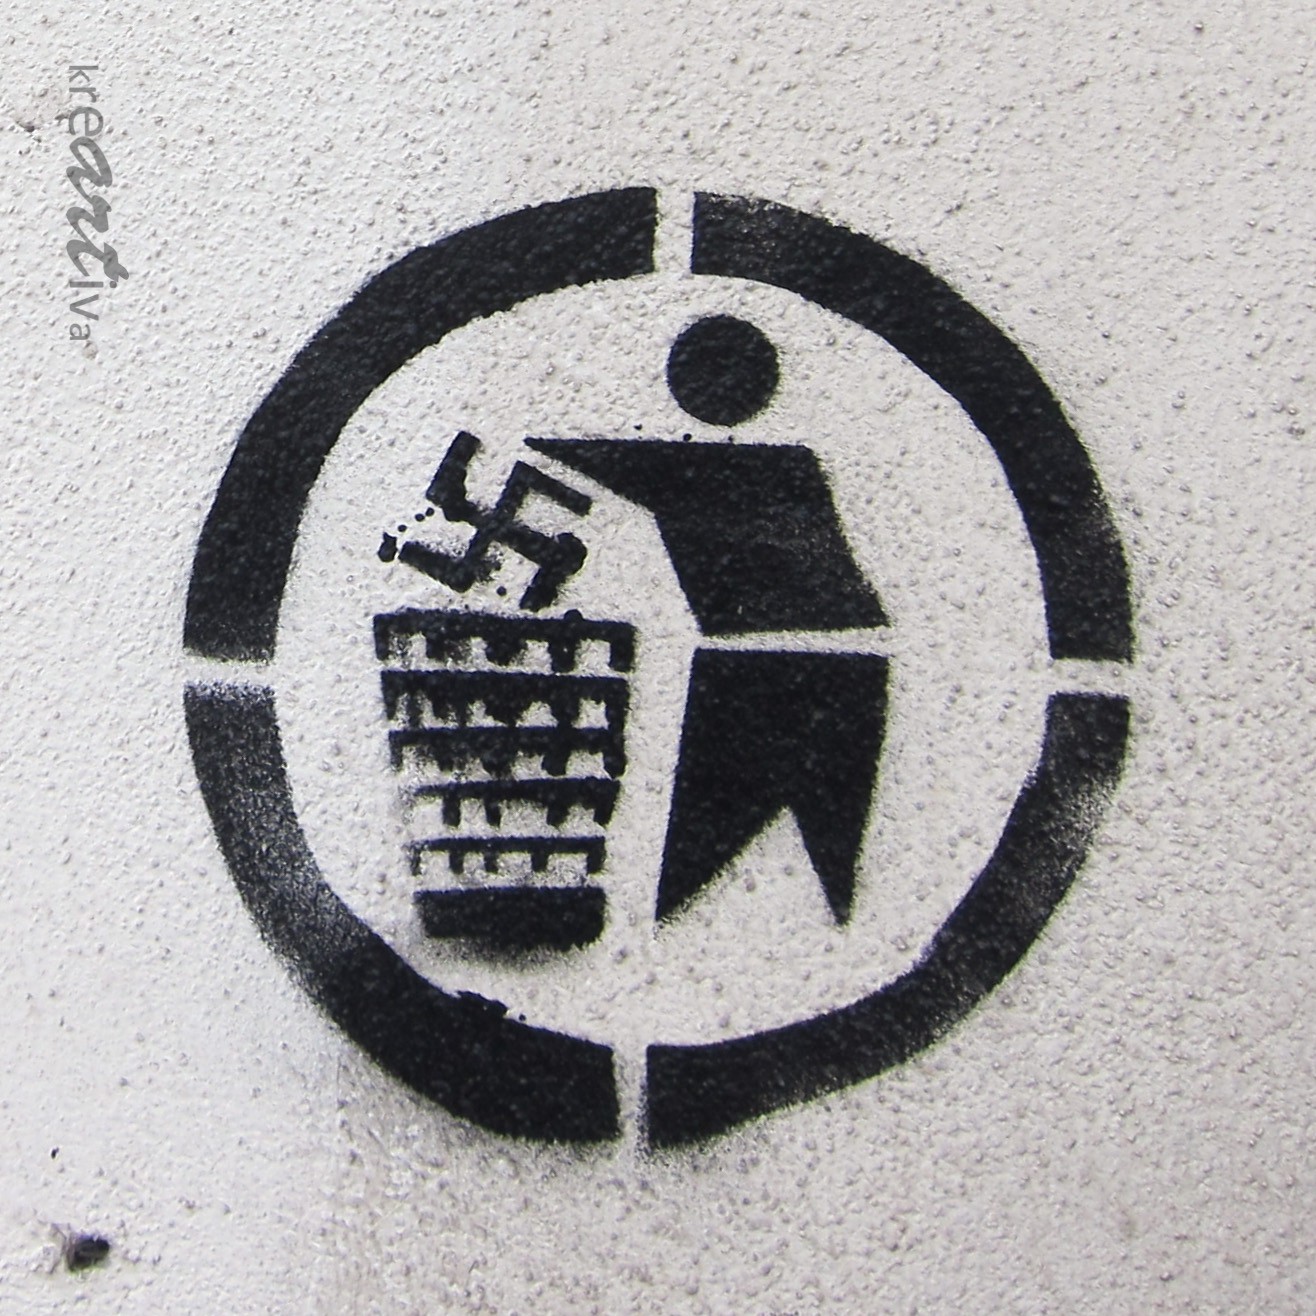 Please dispose of swastika properly – Hakenkreuz bitte fachgerecht entsorgen, Erlangen Germany 2014.